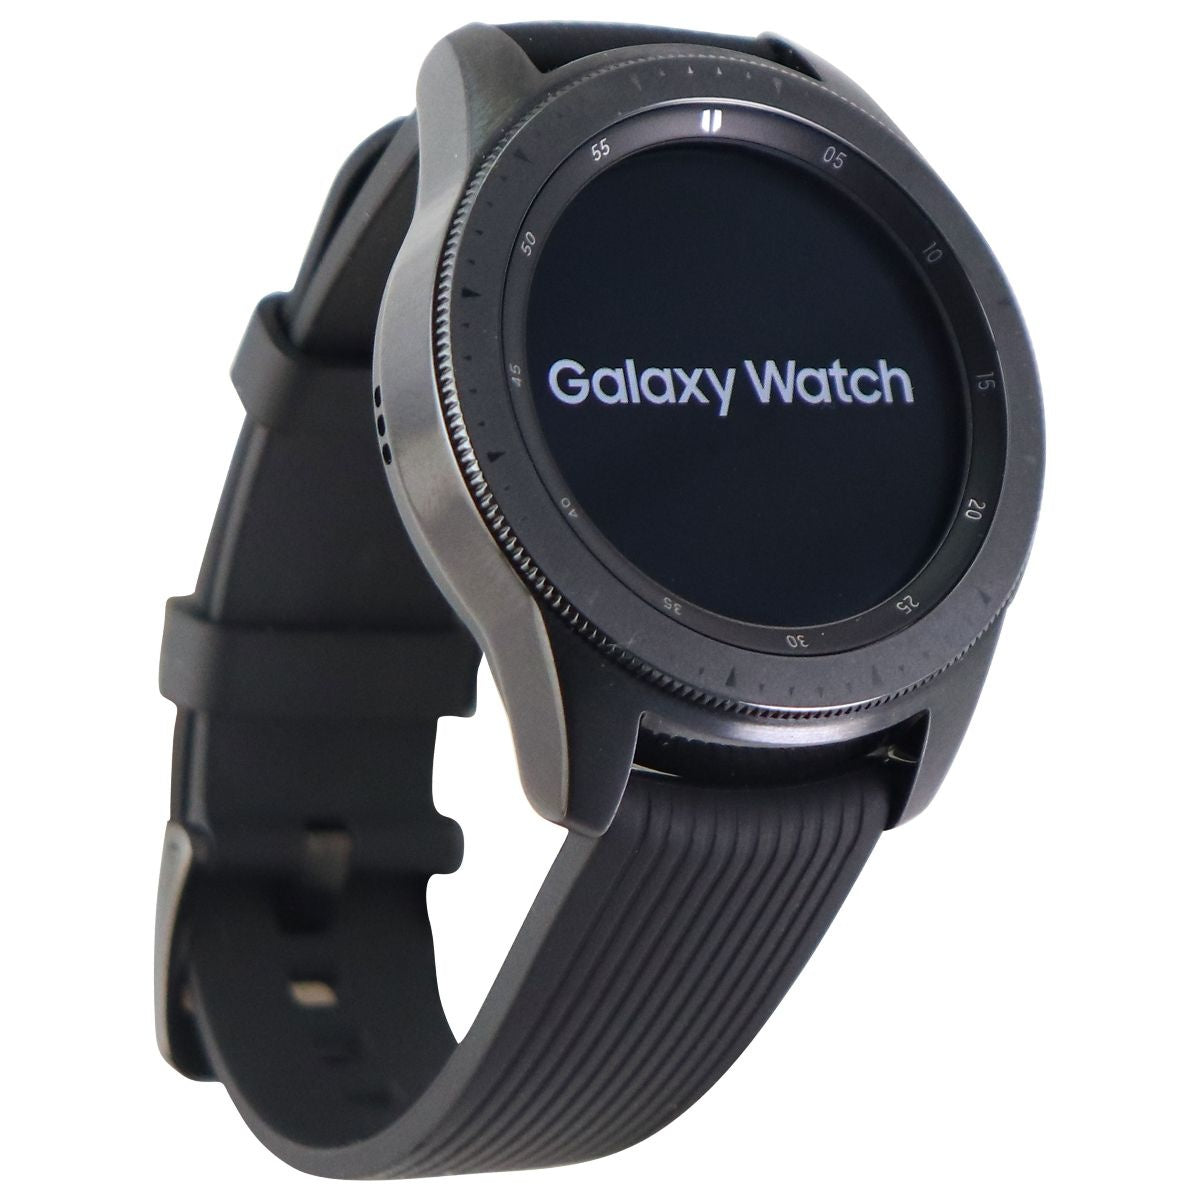 Samsung Galaxy Watch 42 mm Bluetooth + LTE Or (Rose Gold) R815